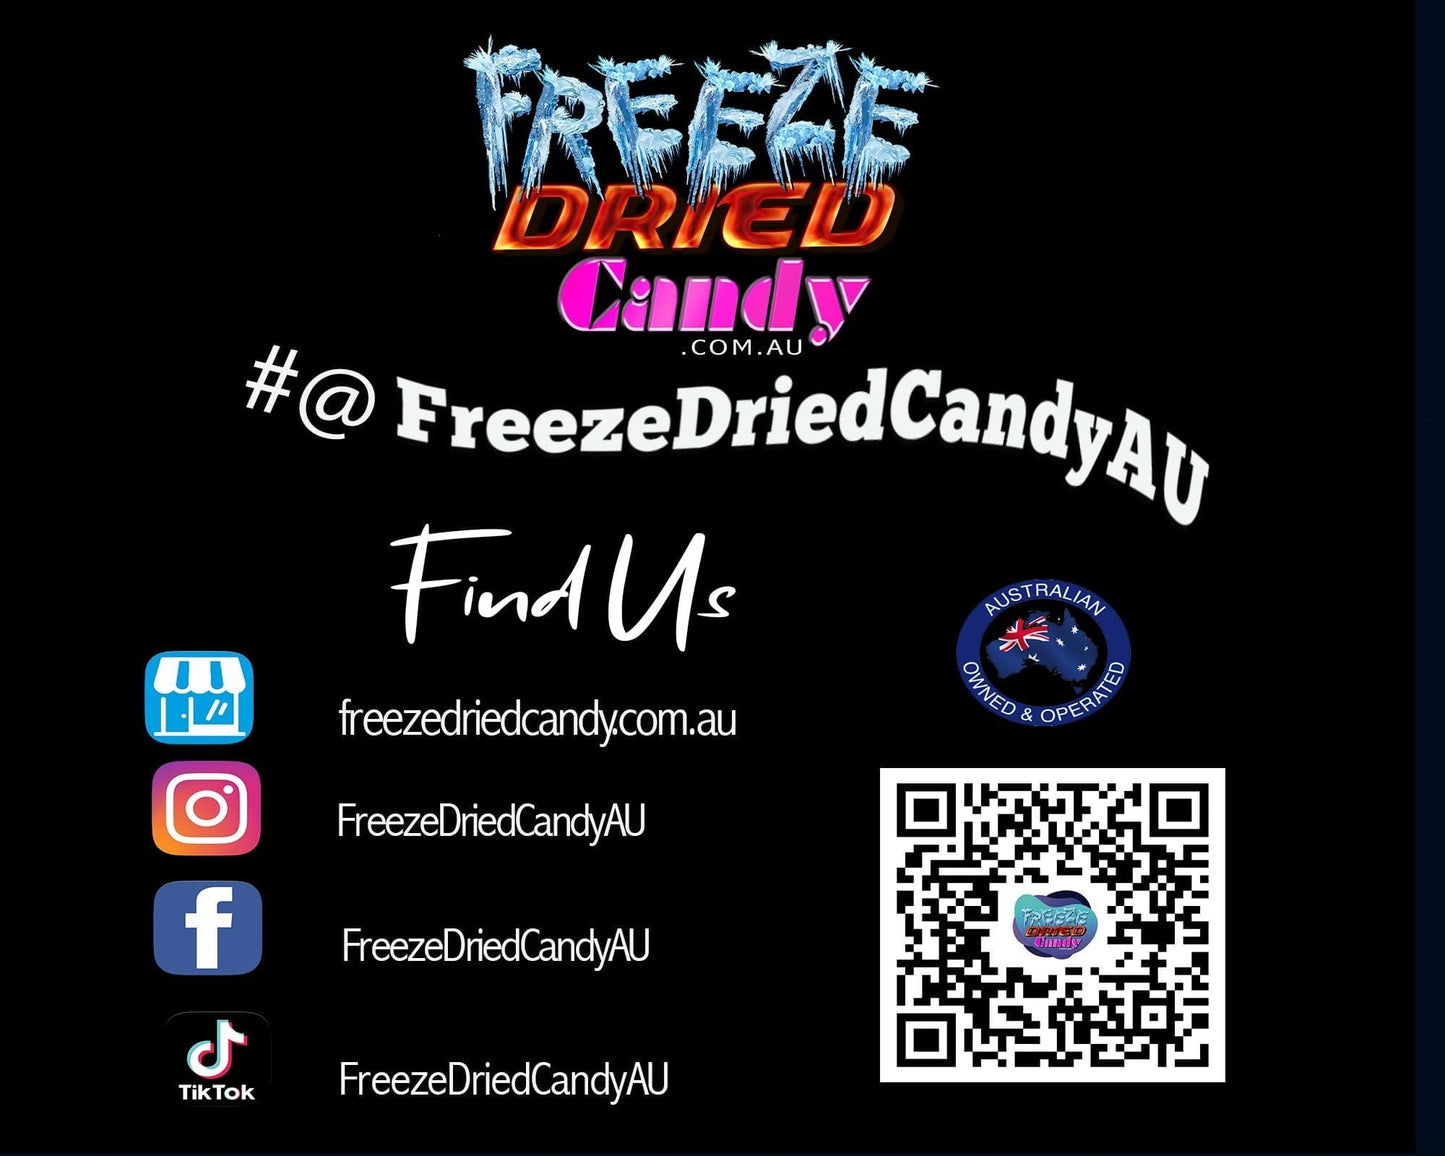 FreezeDriedCandy.com.au Find Us on the internet